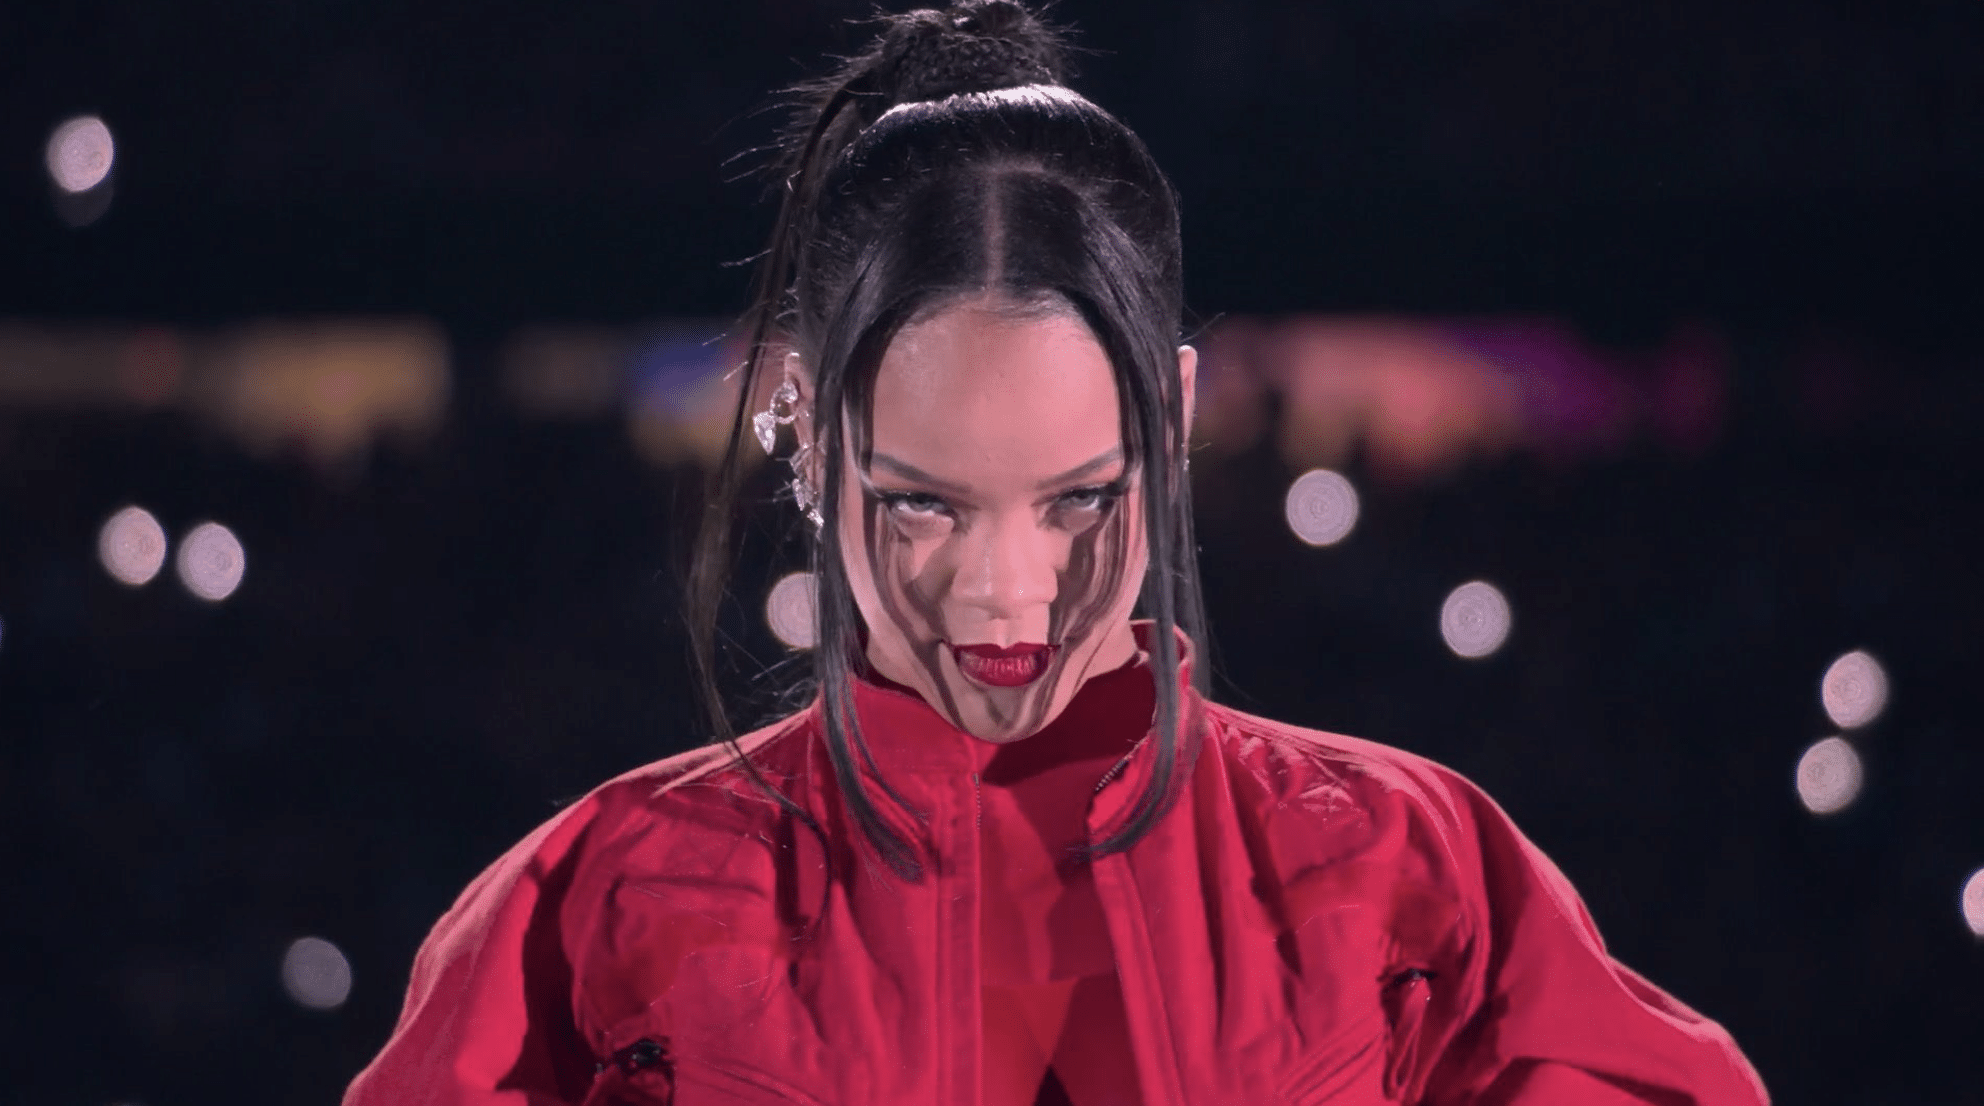 Rihanna's Super Bowl Halftime Show performance